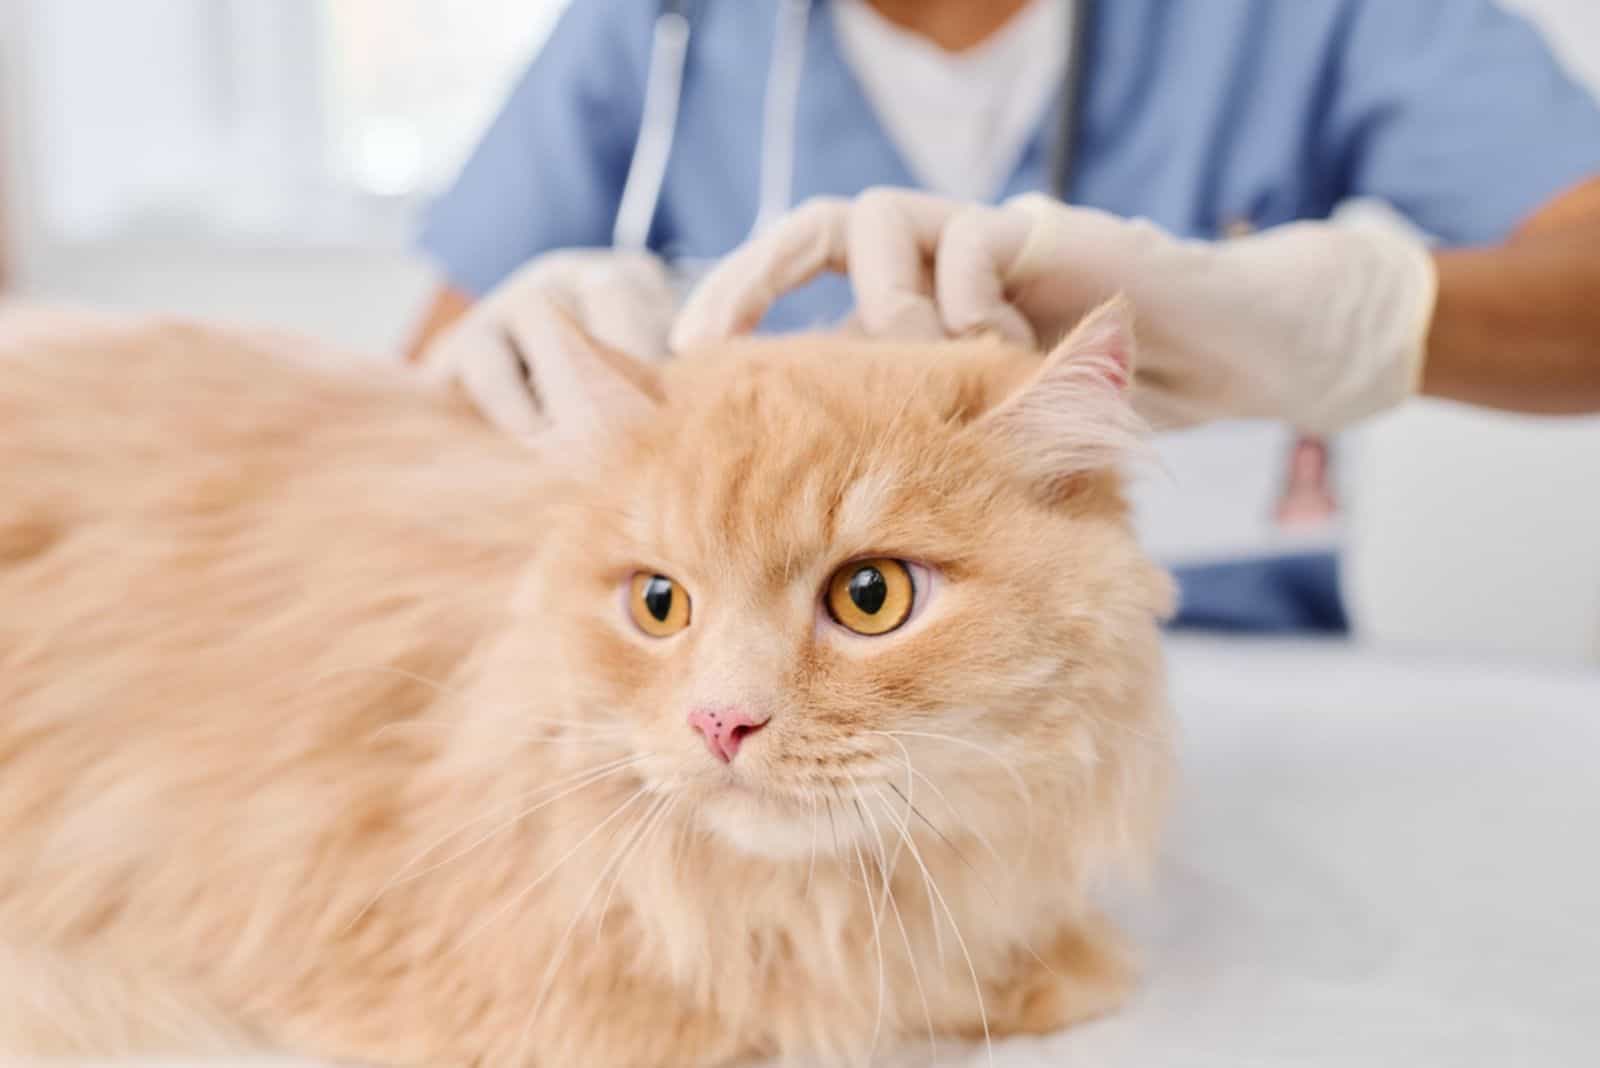 vet wearing protective gloves checking skin health of fluffy ginger cat